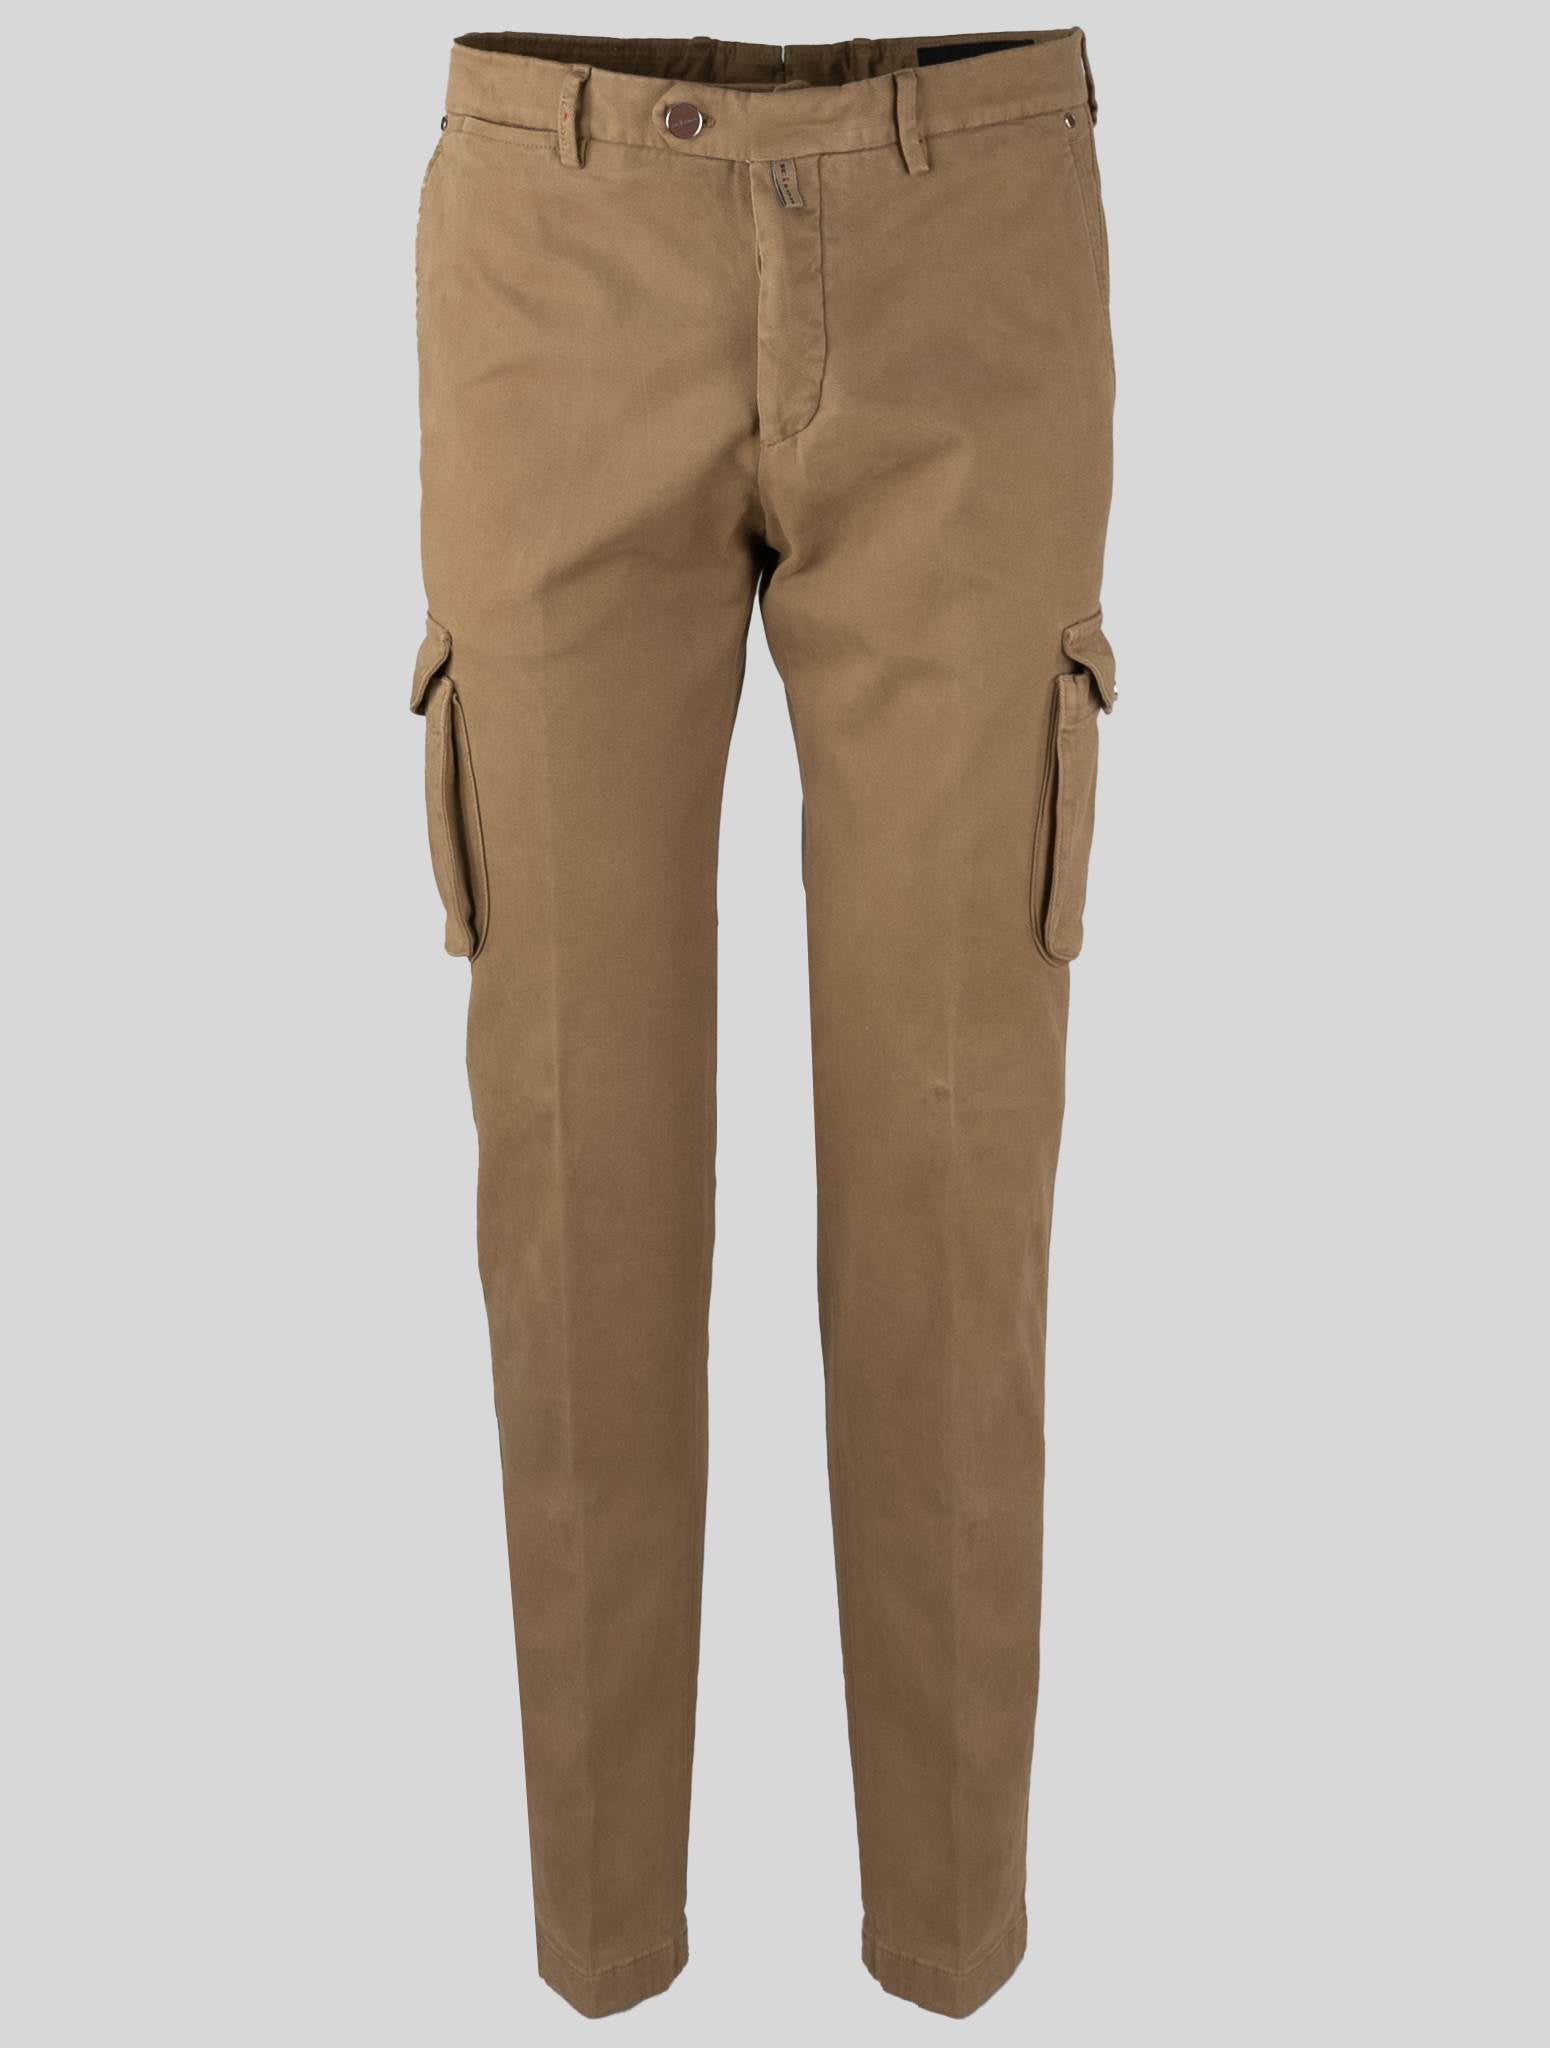 Black-colored ripstop nylon cargo pants | Golden Goose